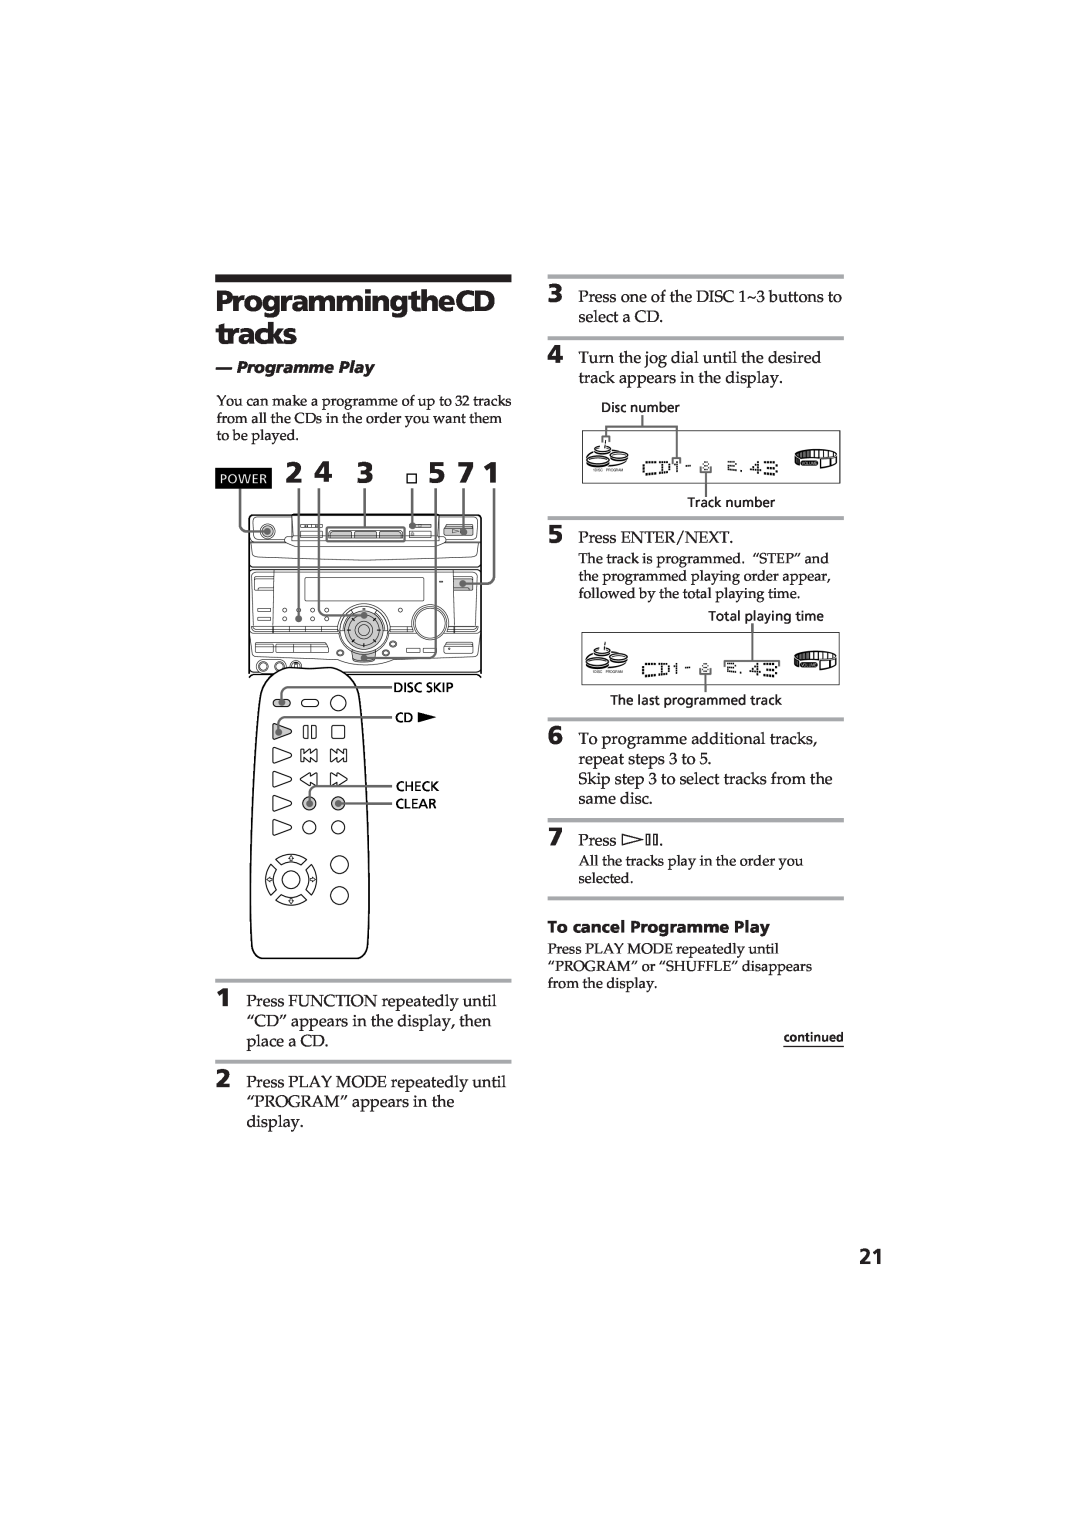 Sony MHC-RX80 manual ProgrammingtheCD tracks, ¹ 5 7, To cancel Programme Play 